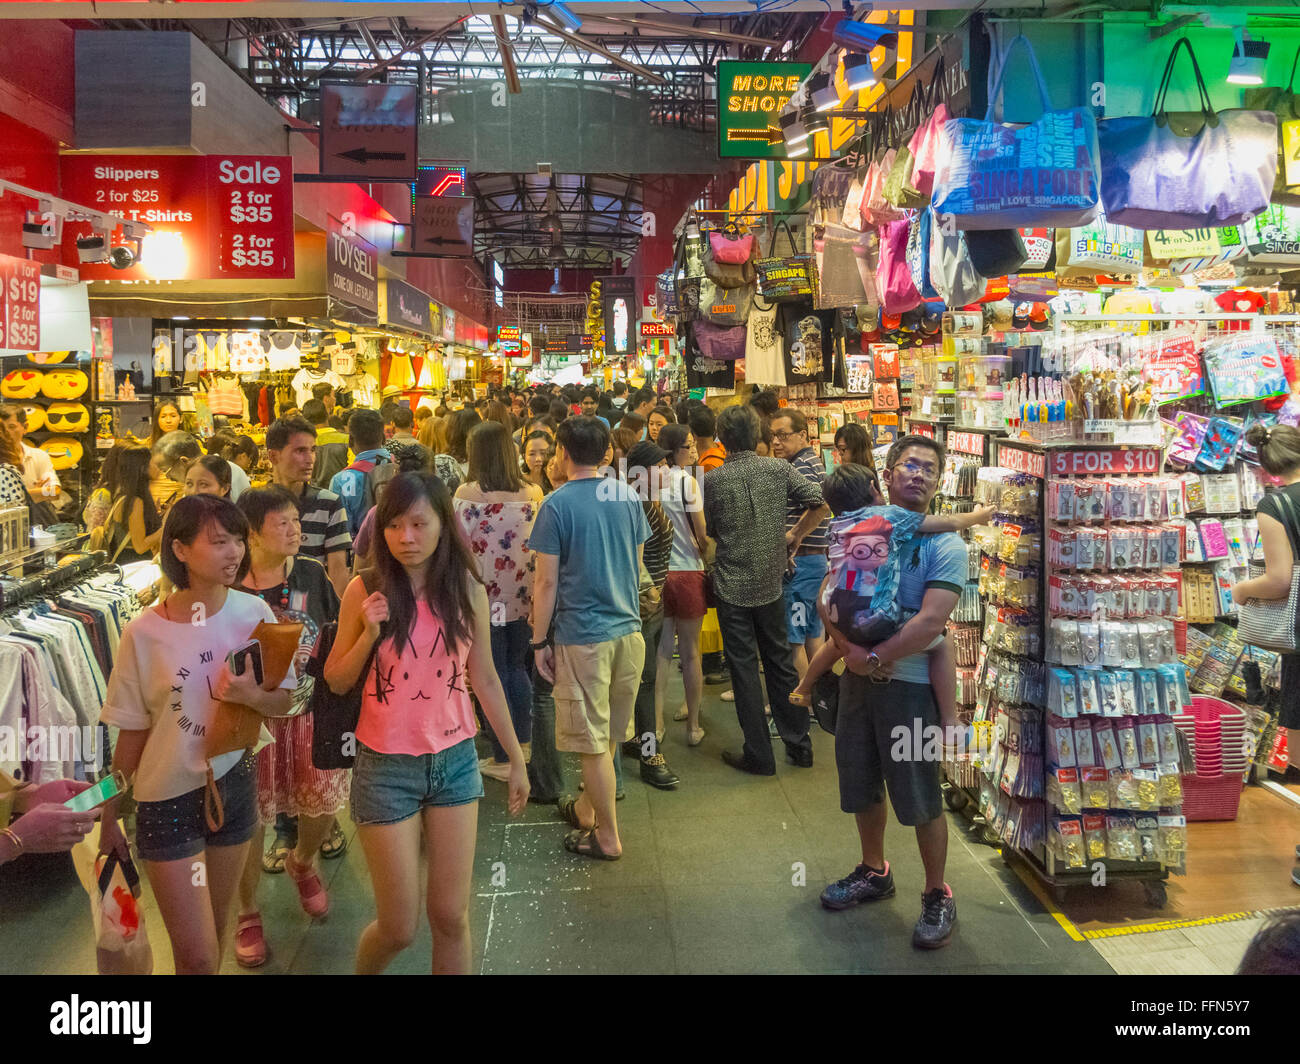 Kuala Lumpur - die berühmten Bugis Street Market in Kuala Lumpur, Malaysia mit Menschen beim Einkaufen an den Marktständen Stockfoto